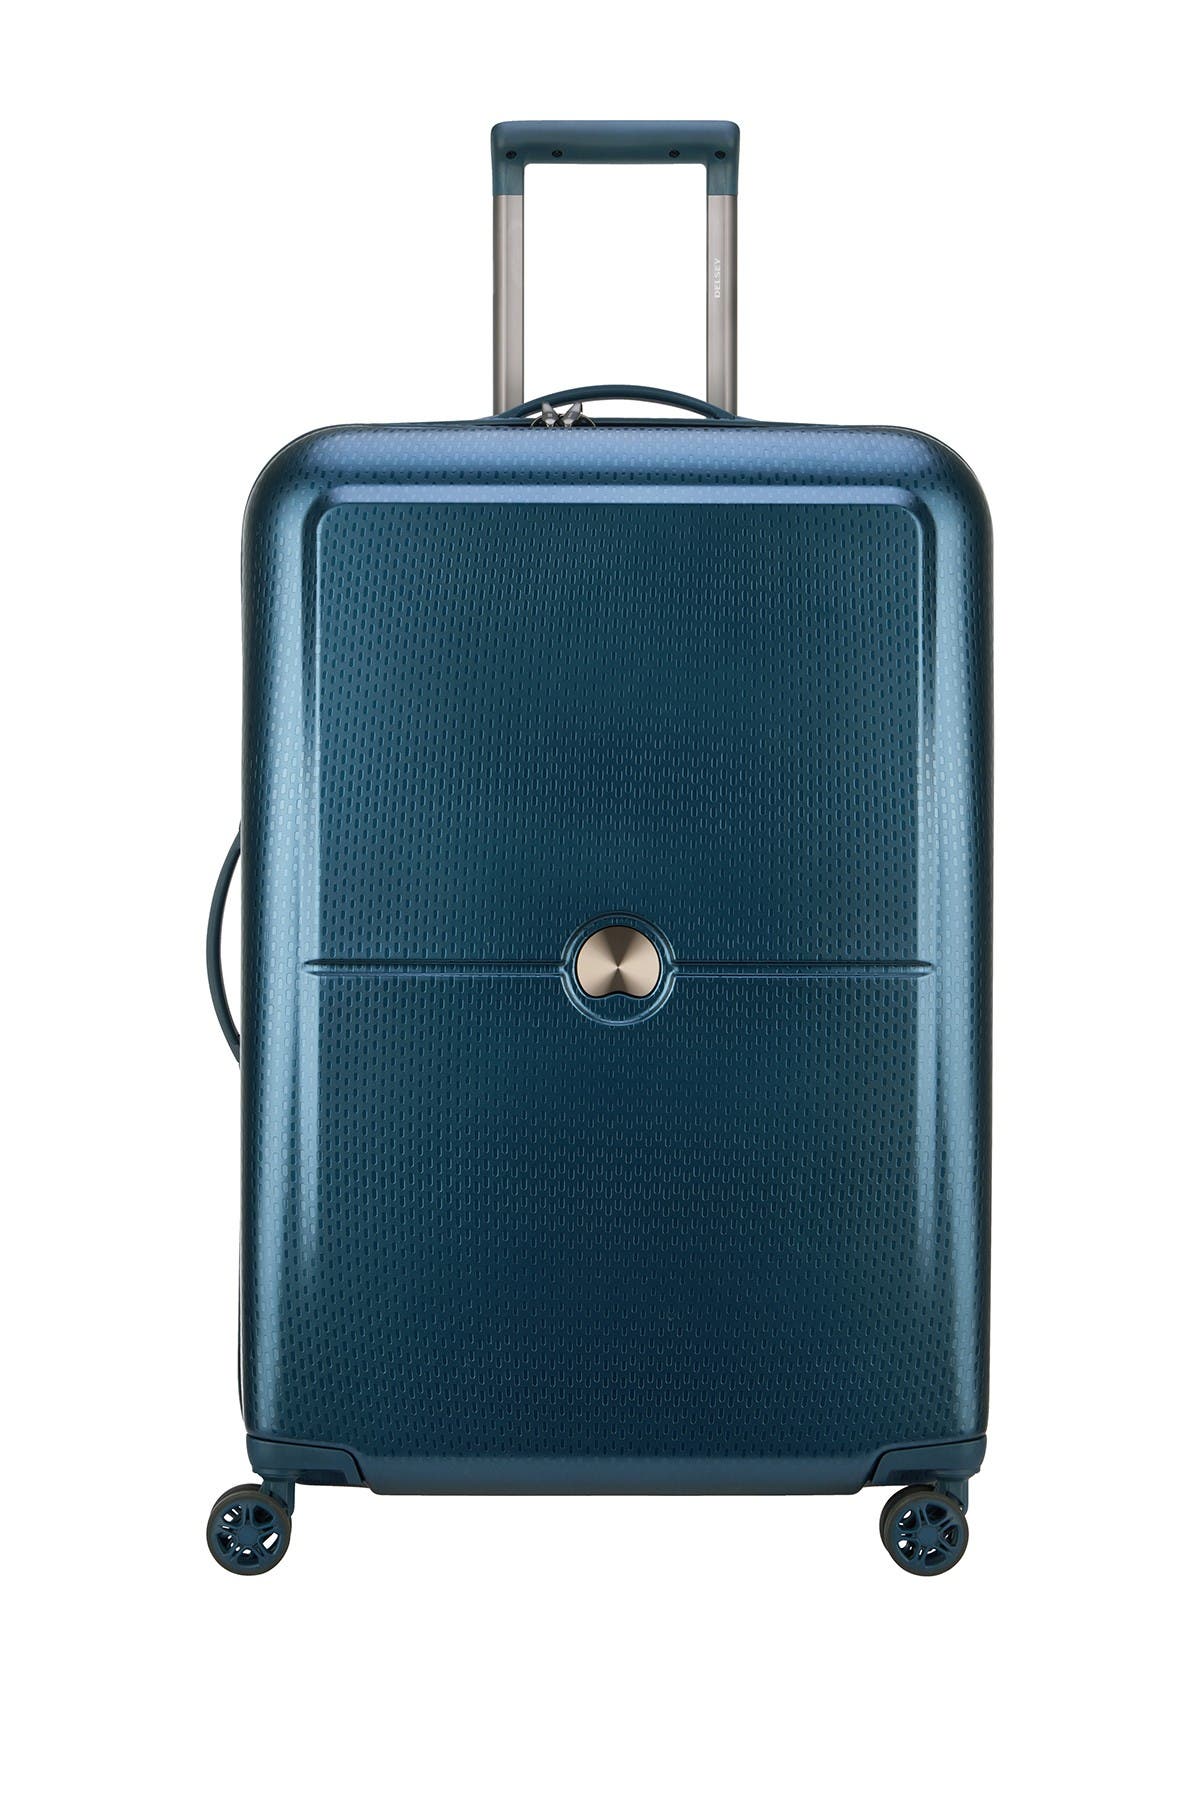 Delsey Turenne 27" Hardside Spinner Suitcase In Night Blue